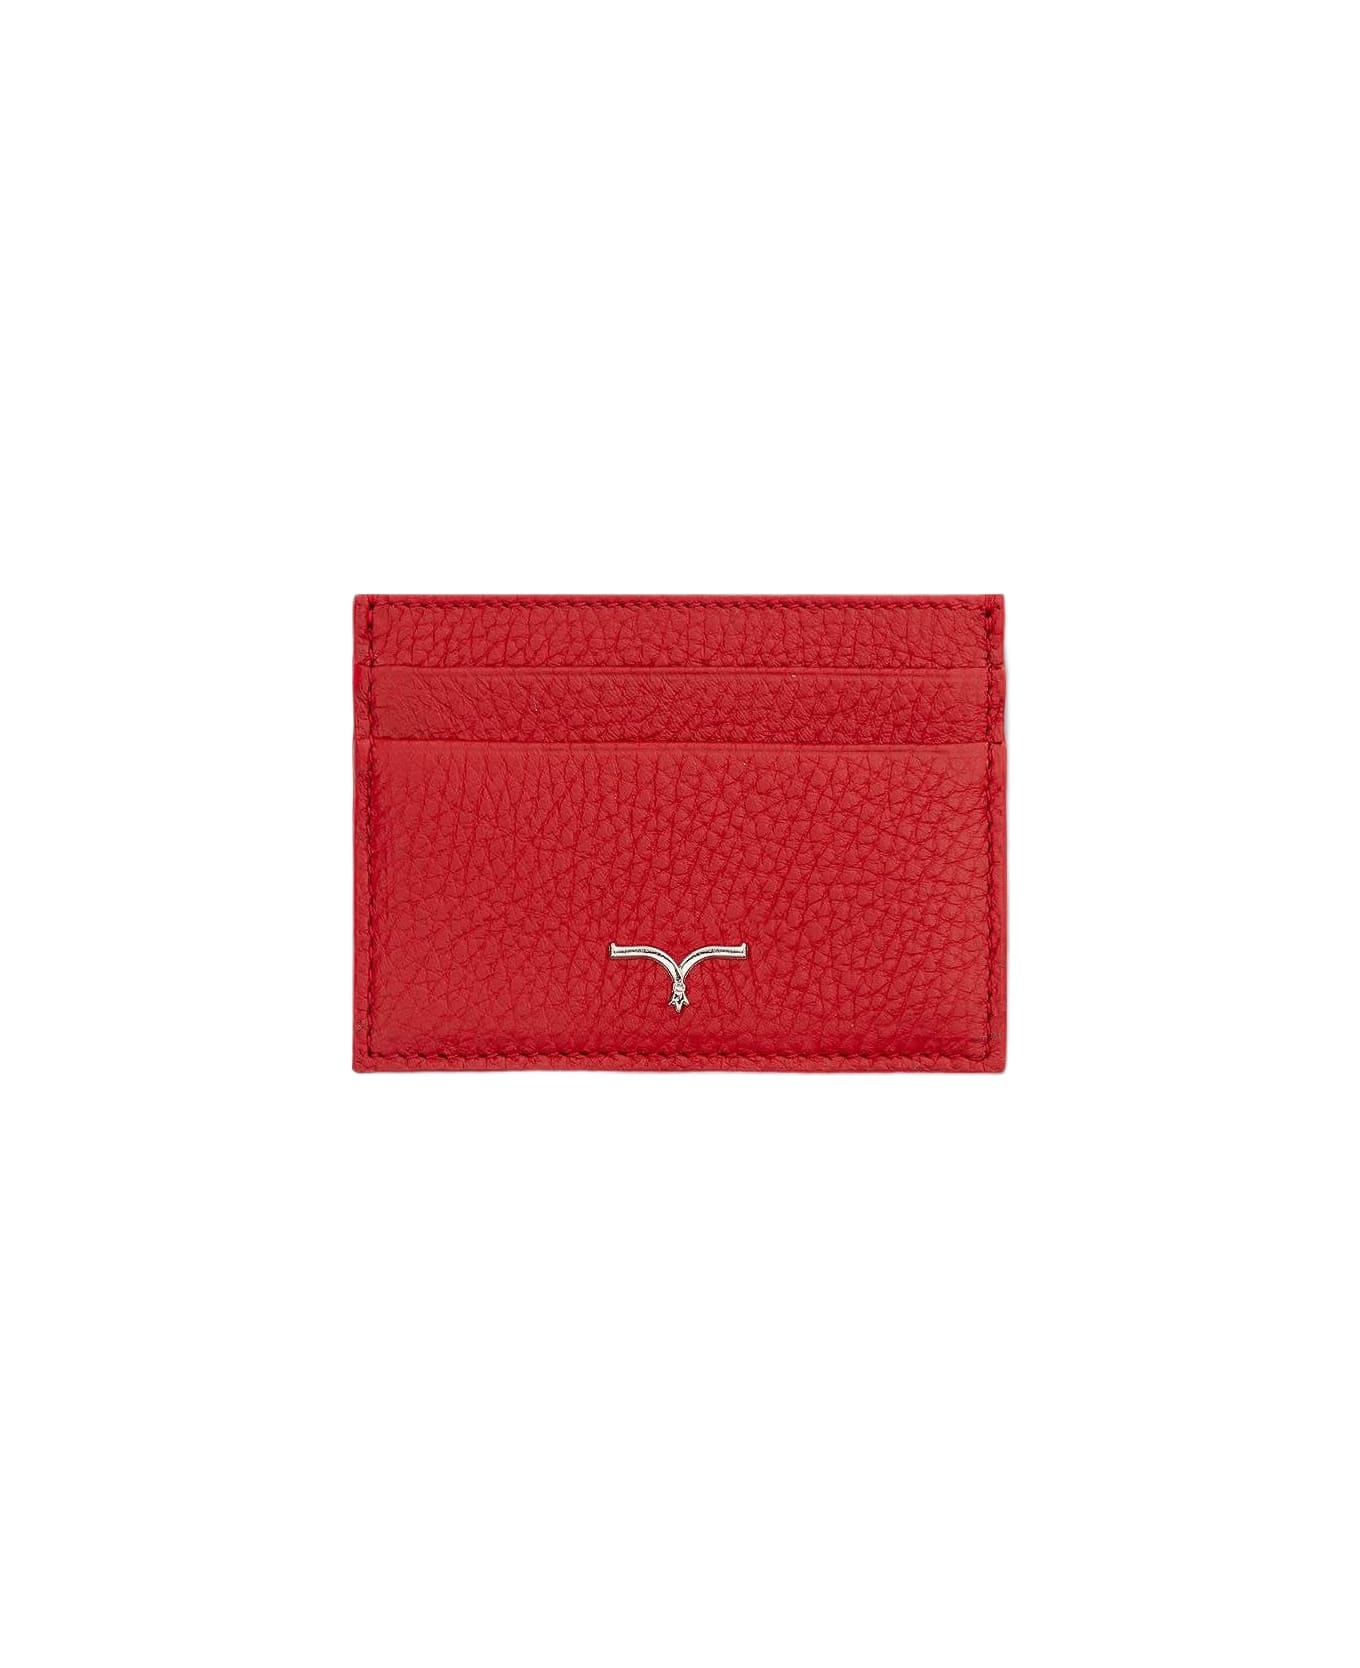 Larusmiani Card Holder 'yield' Wallet - Red